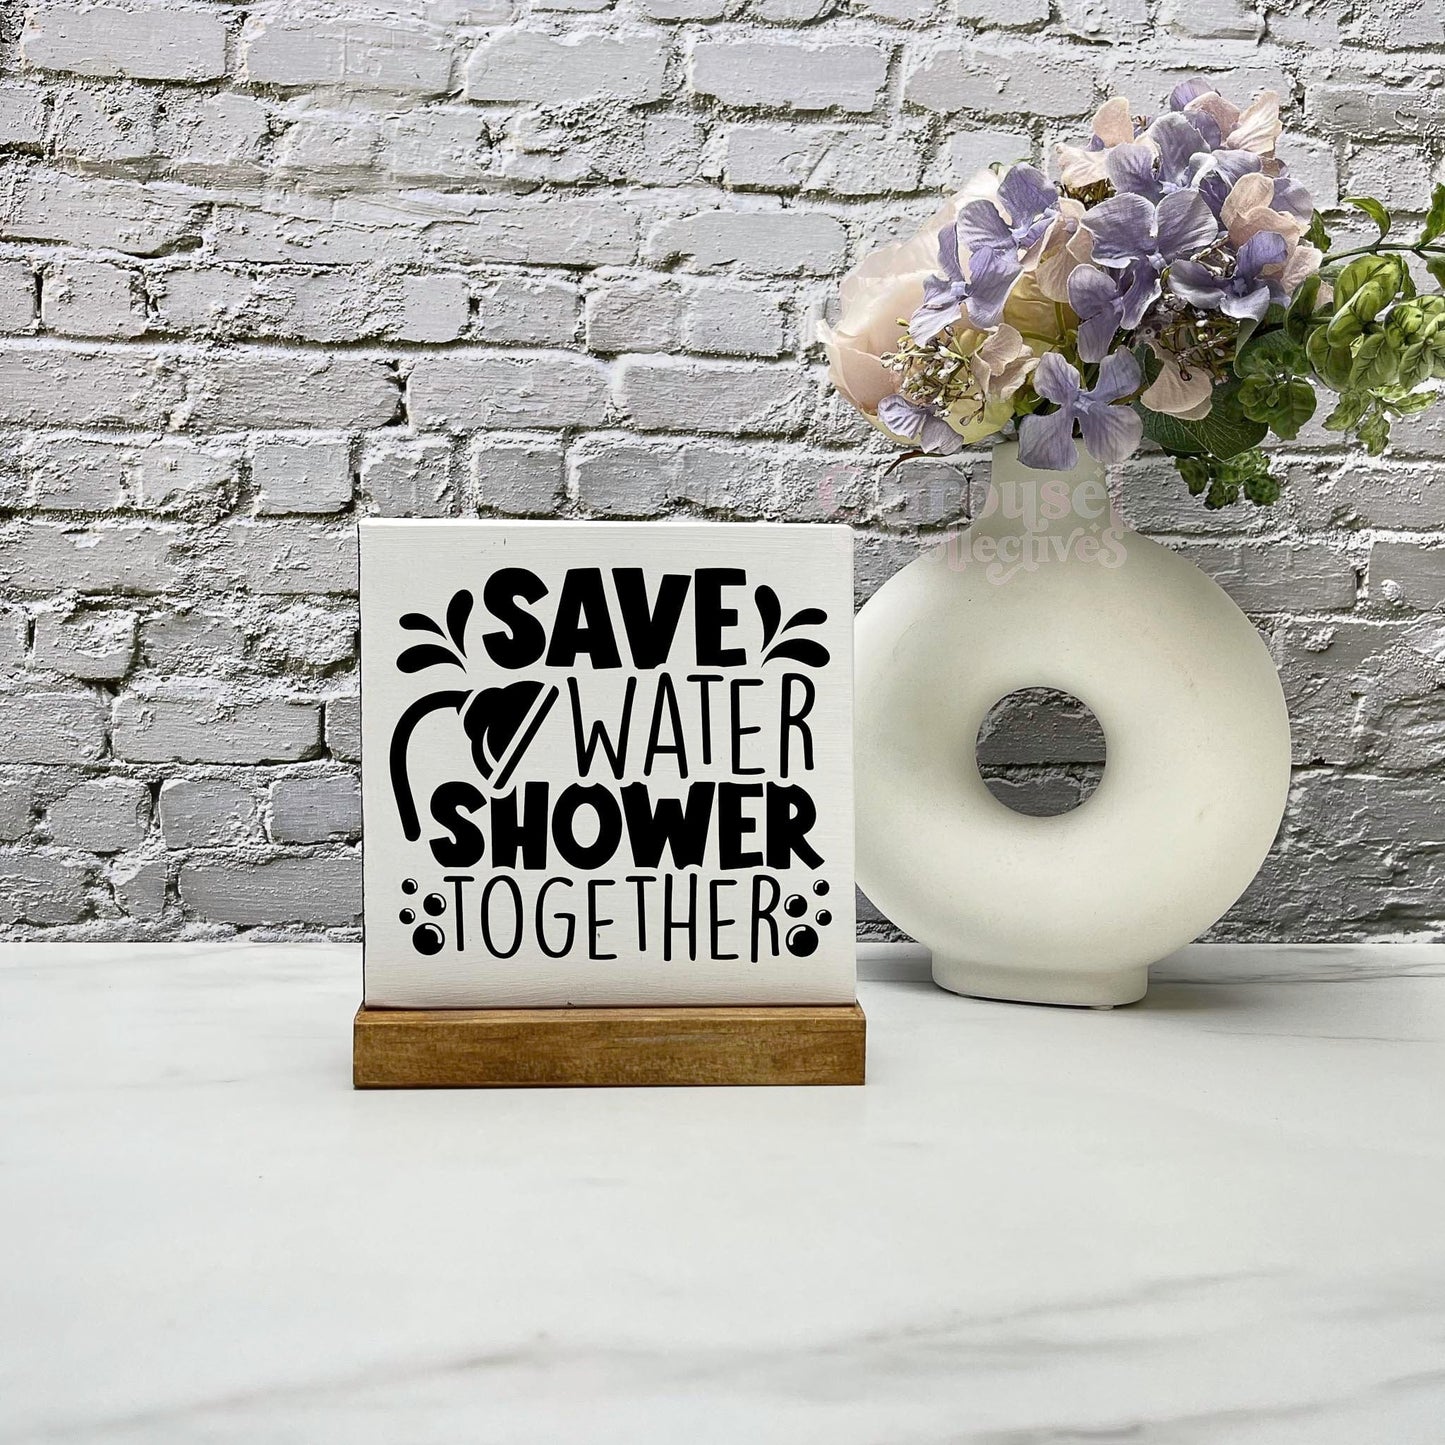 Save water shower together wood sign, bathroom wood sign, bathroom decor